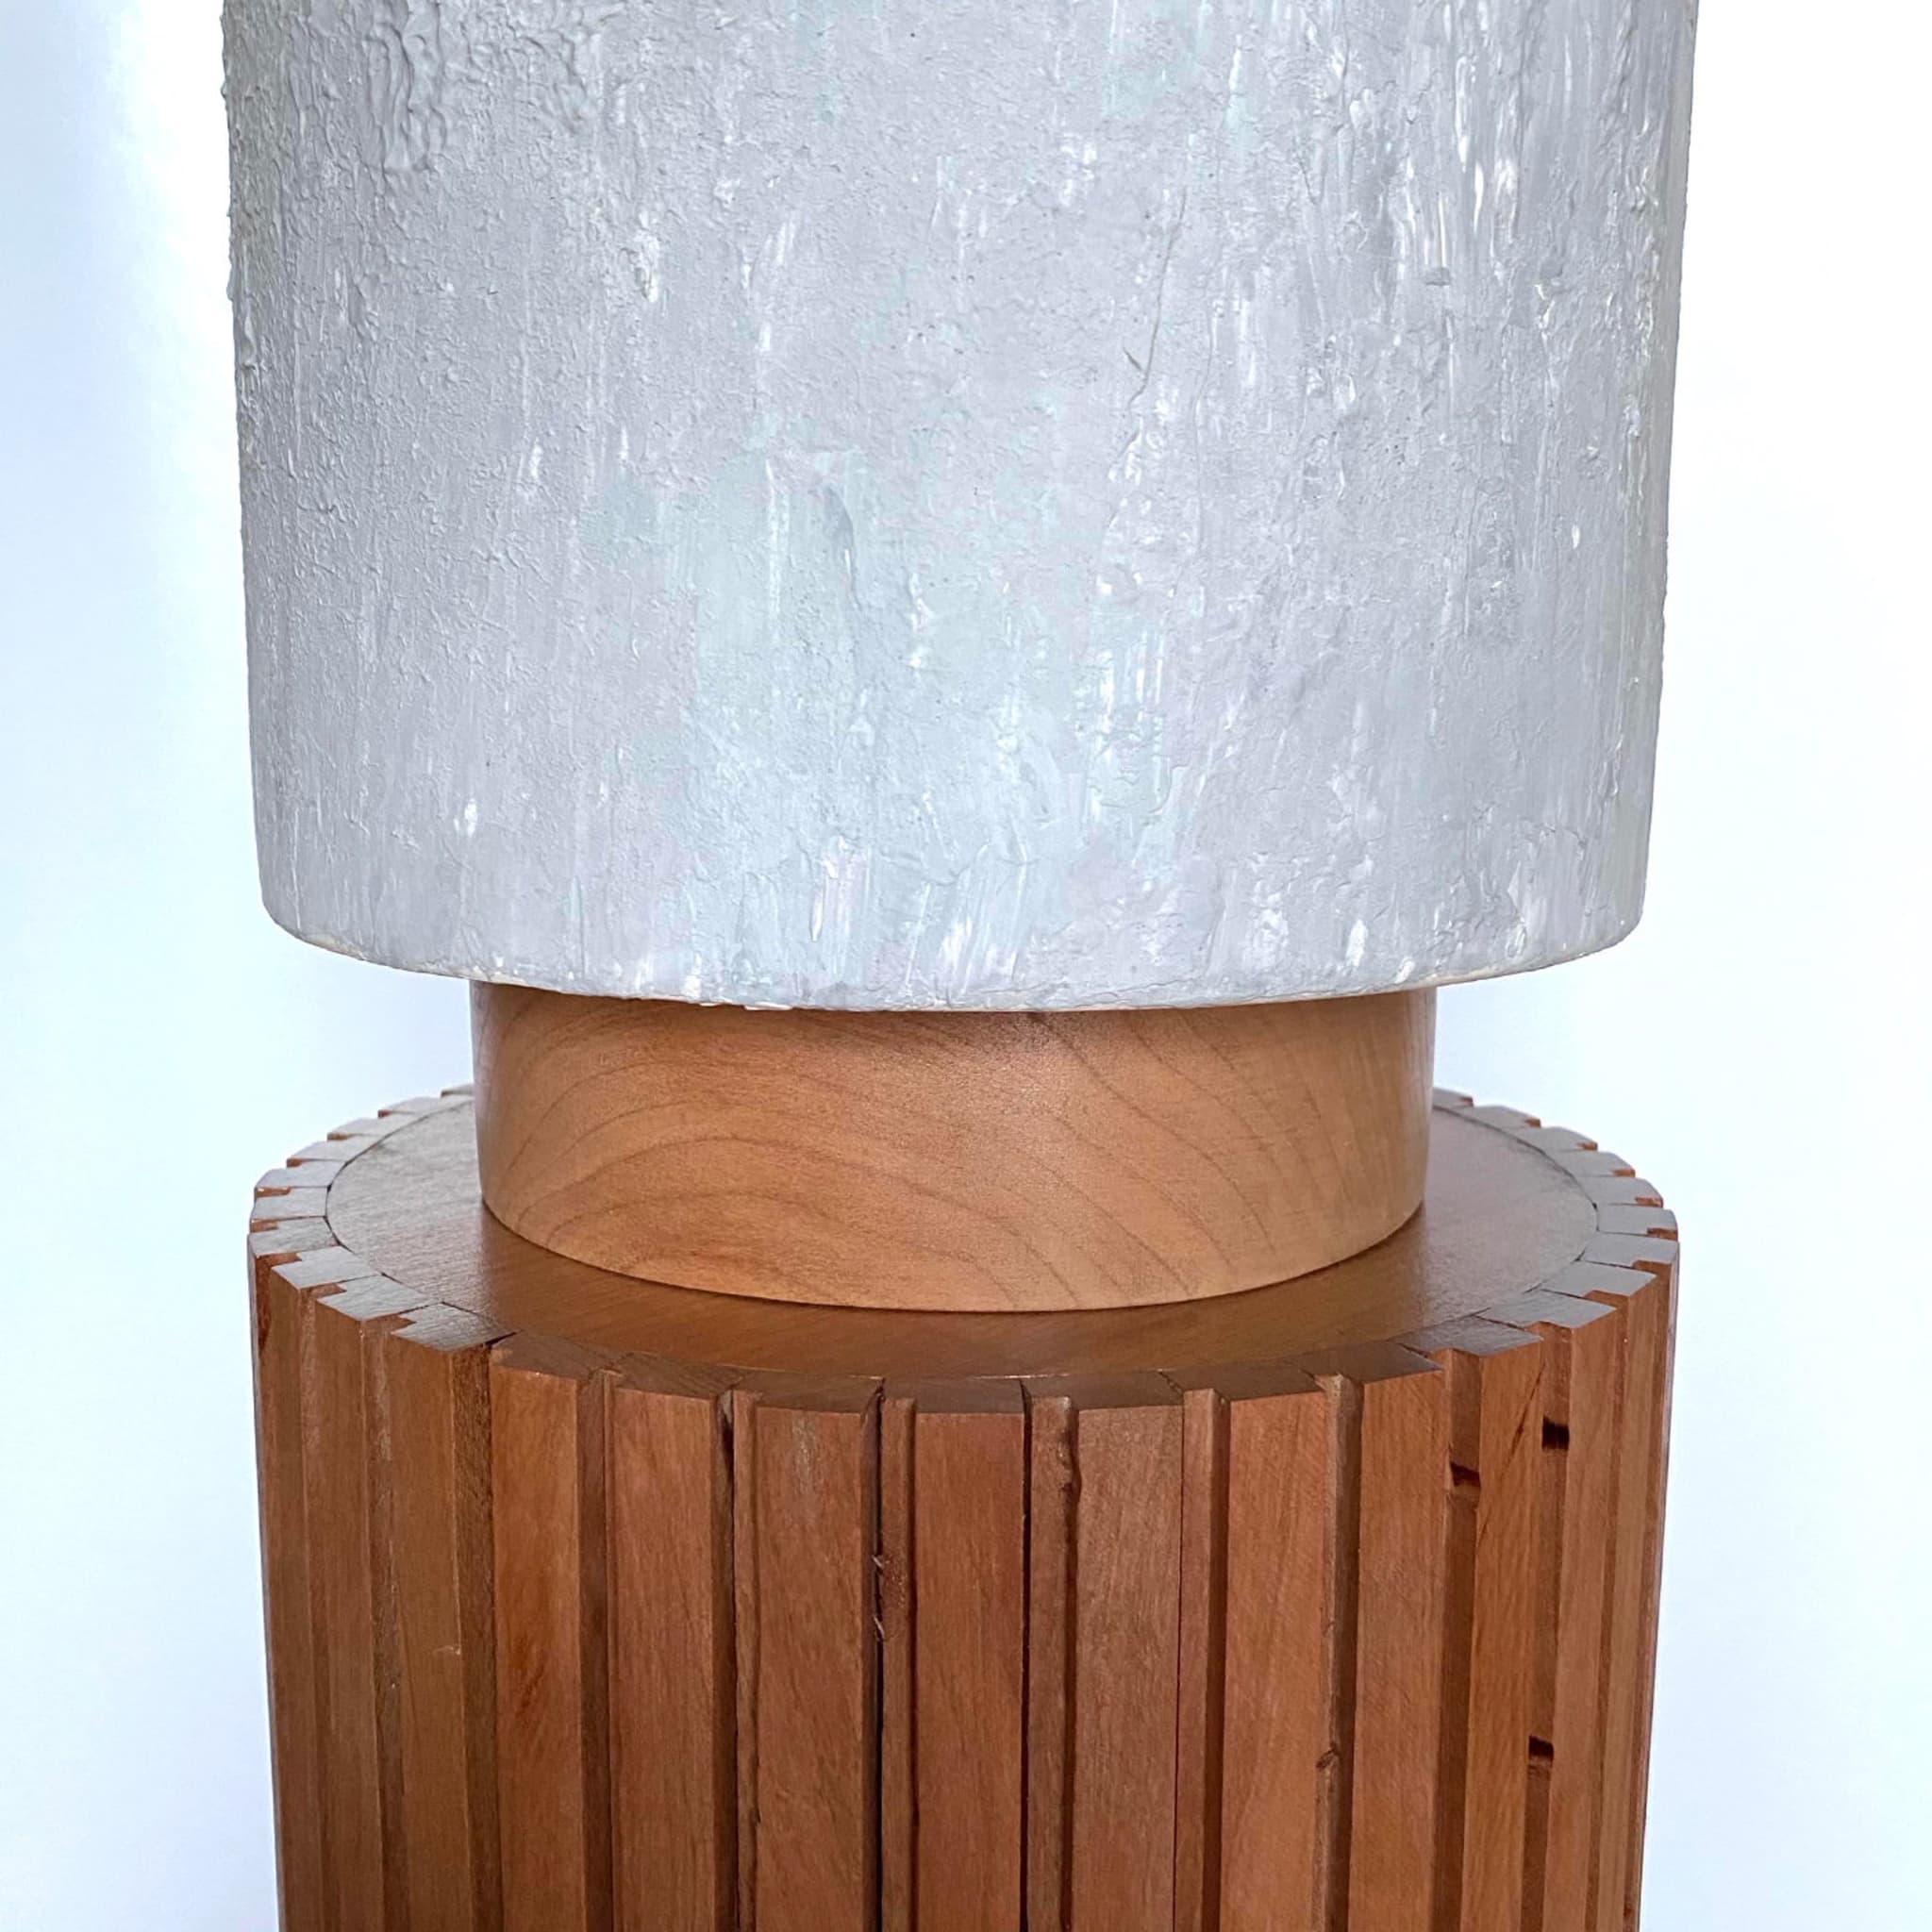 Totem Table Lamp by Mascia Meccani #2 - Alternative view 1